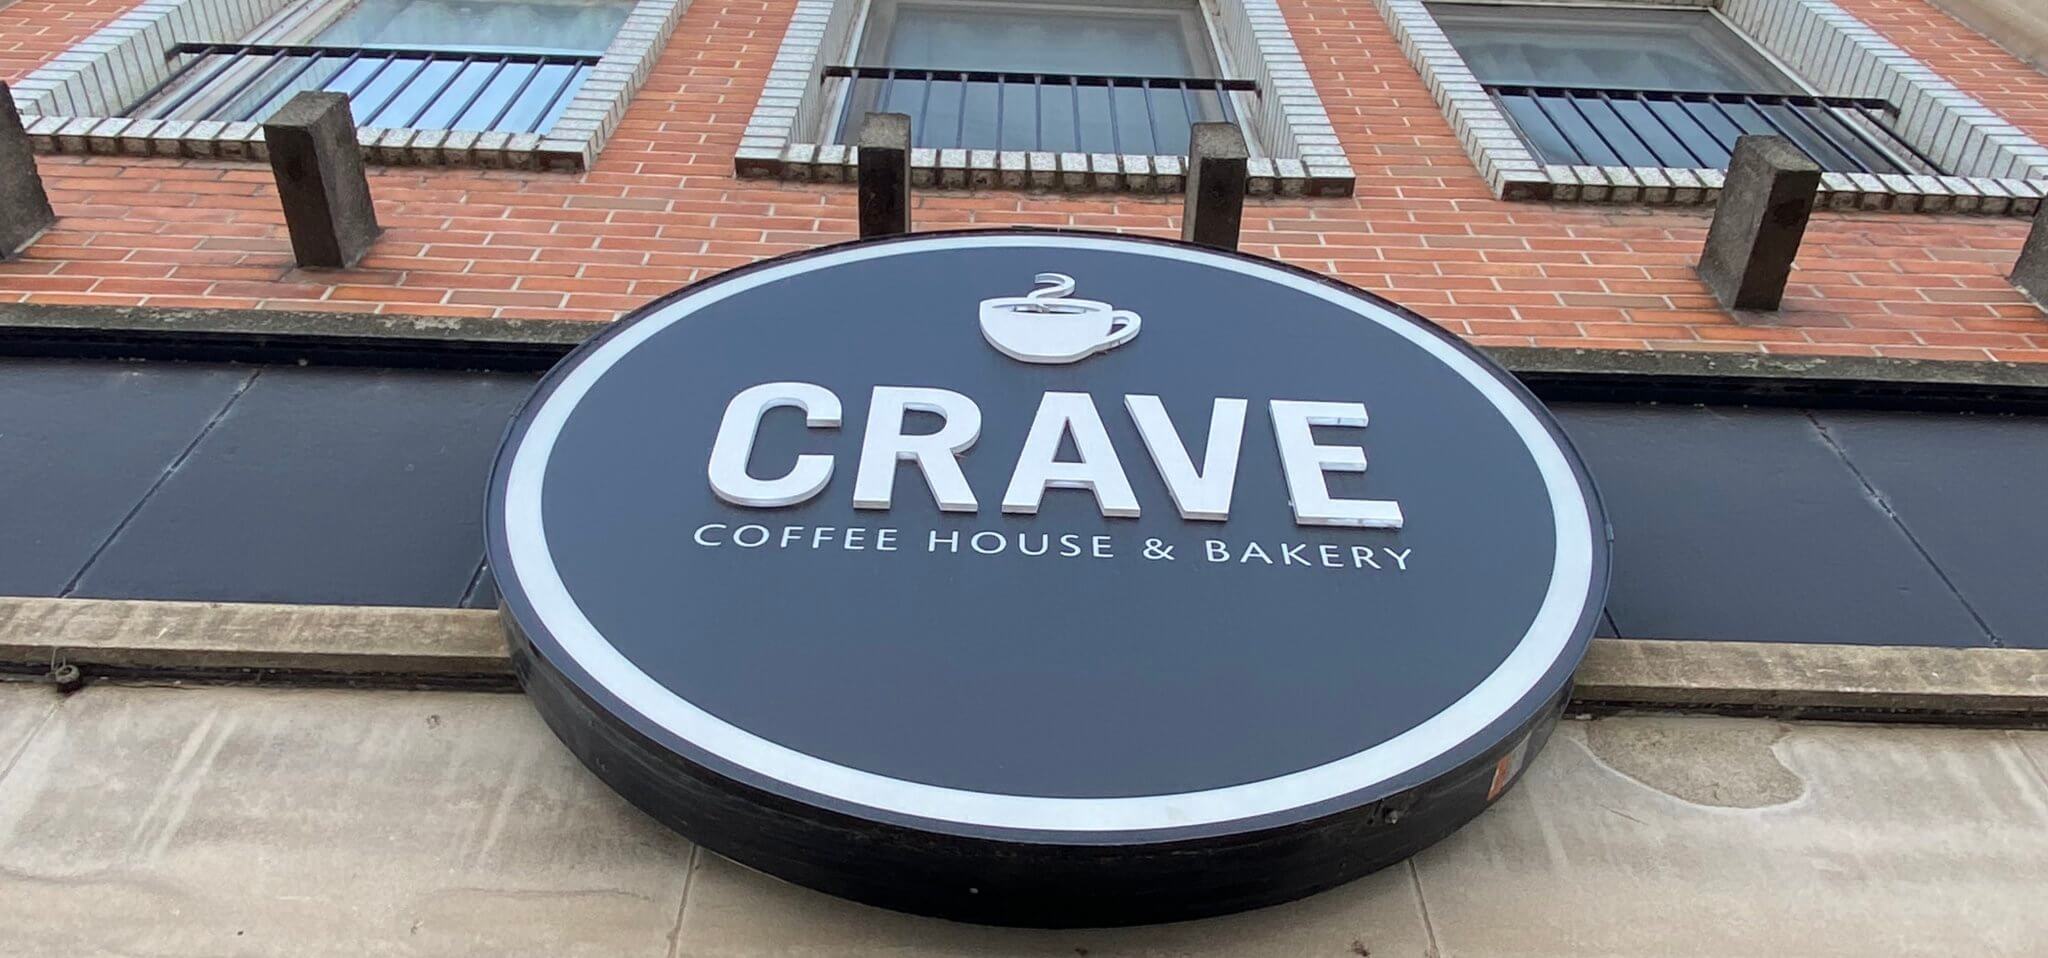 Crave Coffee House Kingston 2048x958 